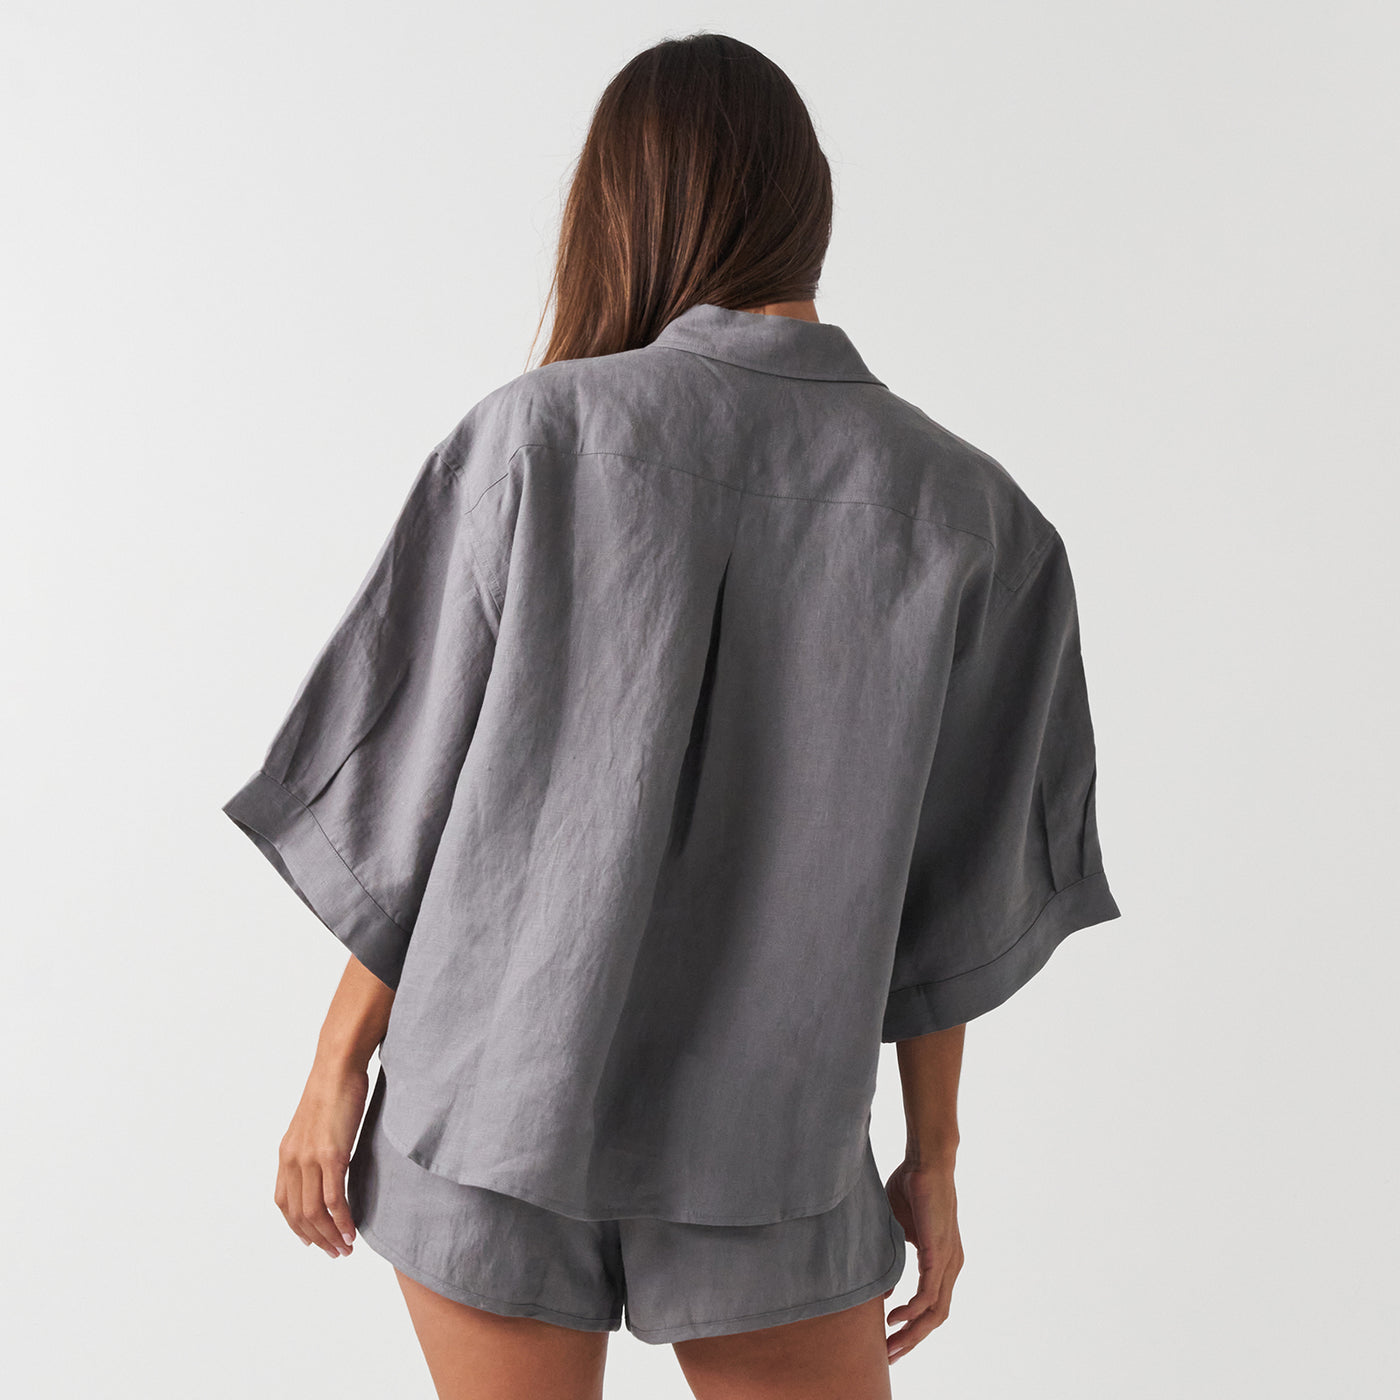 French Flax Linen Ruby Shirt in Warm Grey